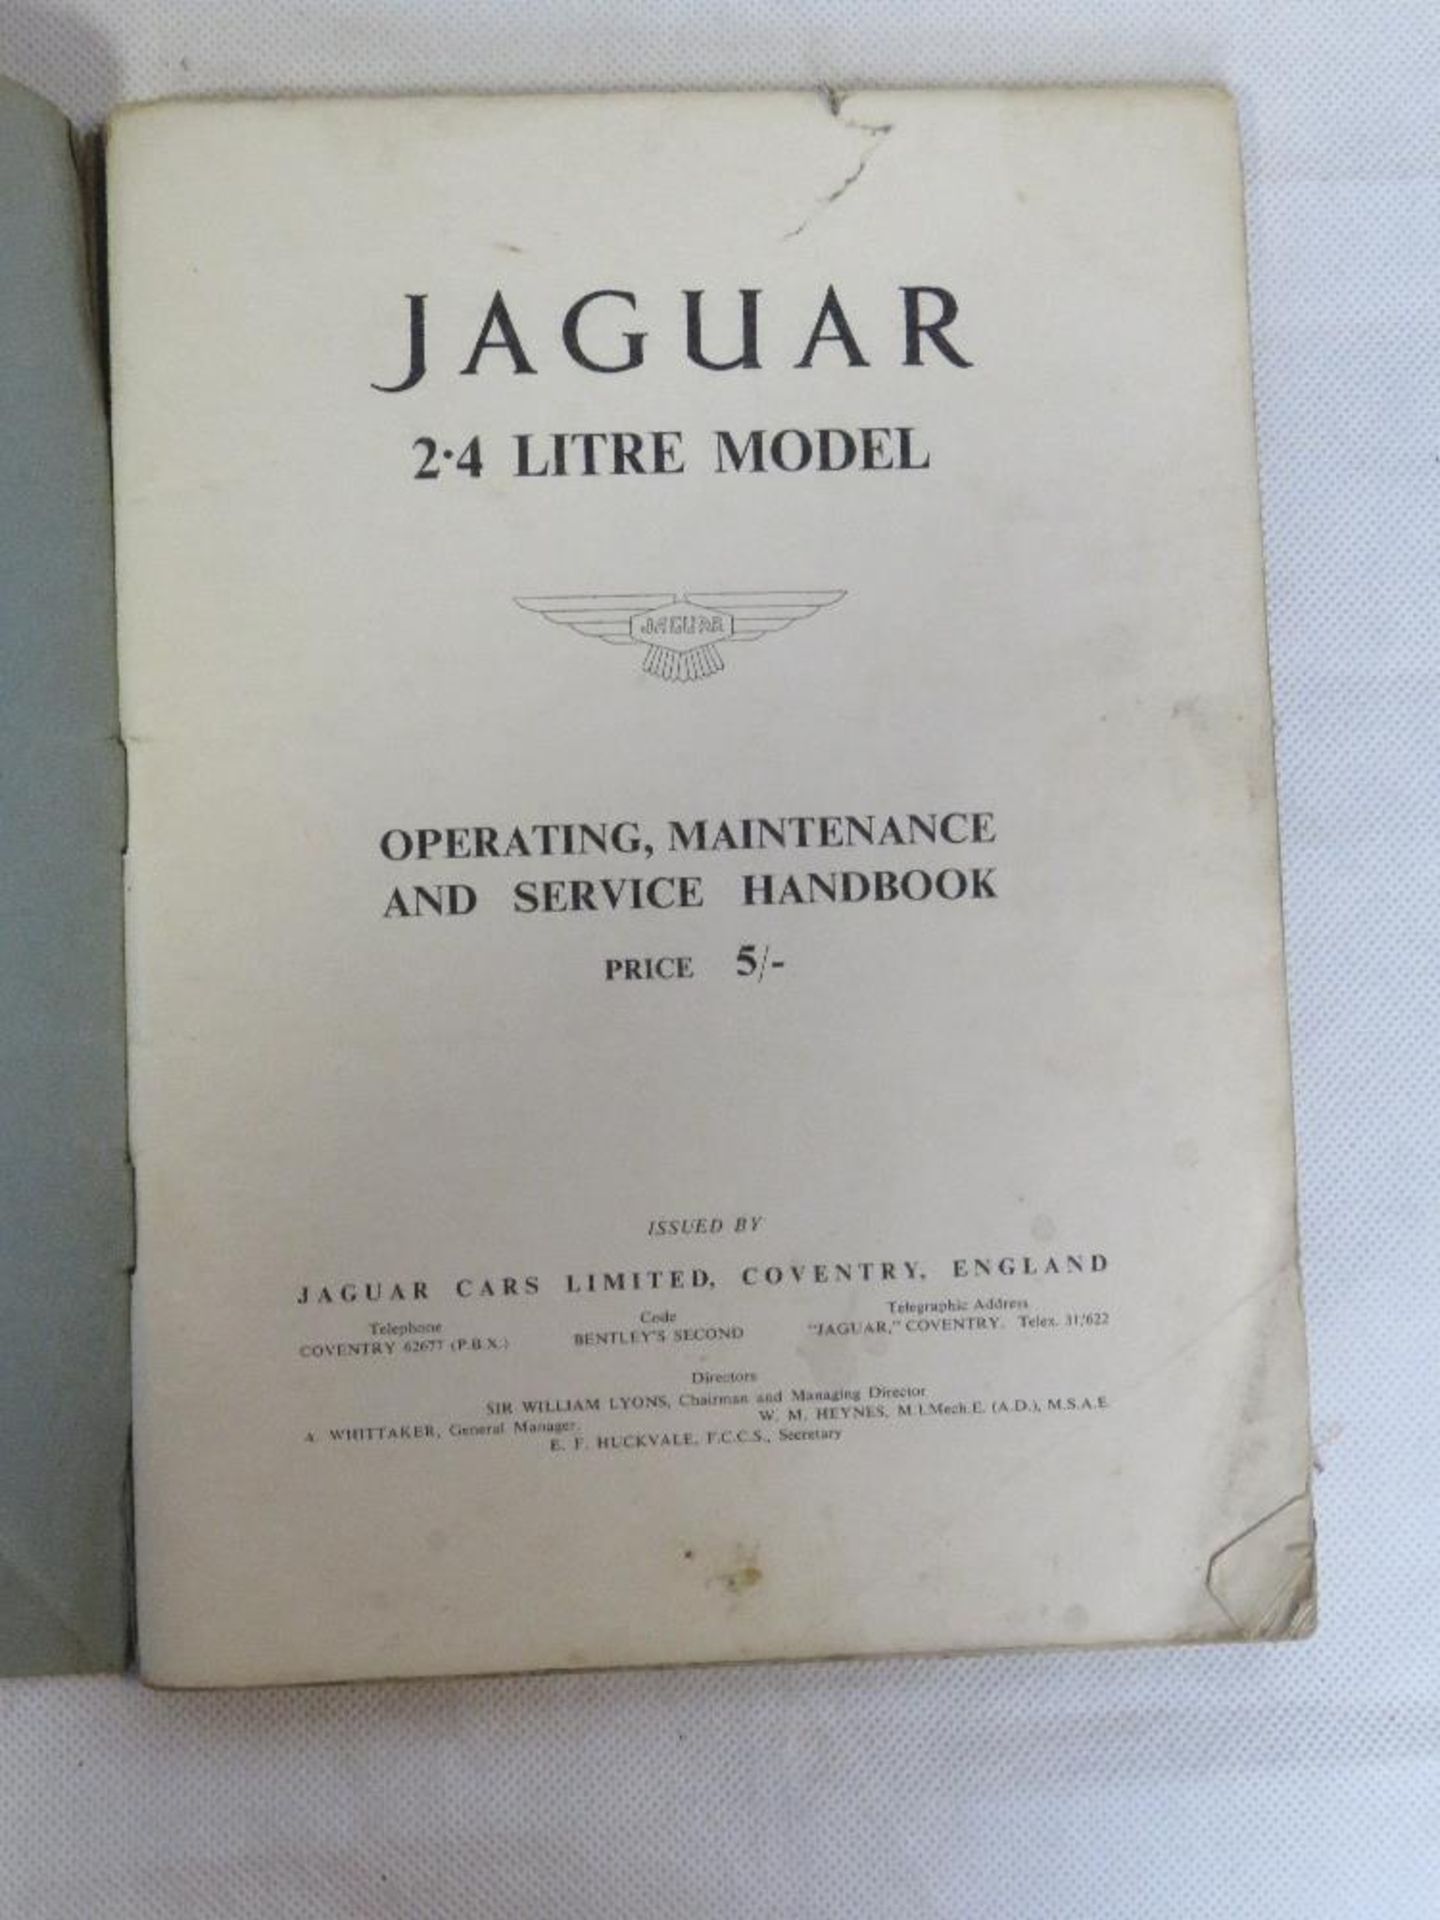 A Jaguar 2.4 litre model operating, maintenance and service handbook. - Image 2 of 2